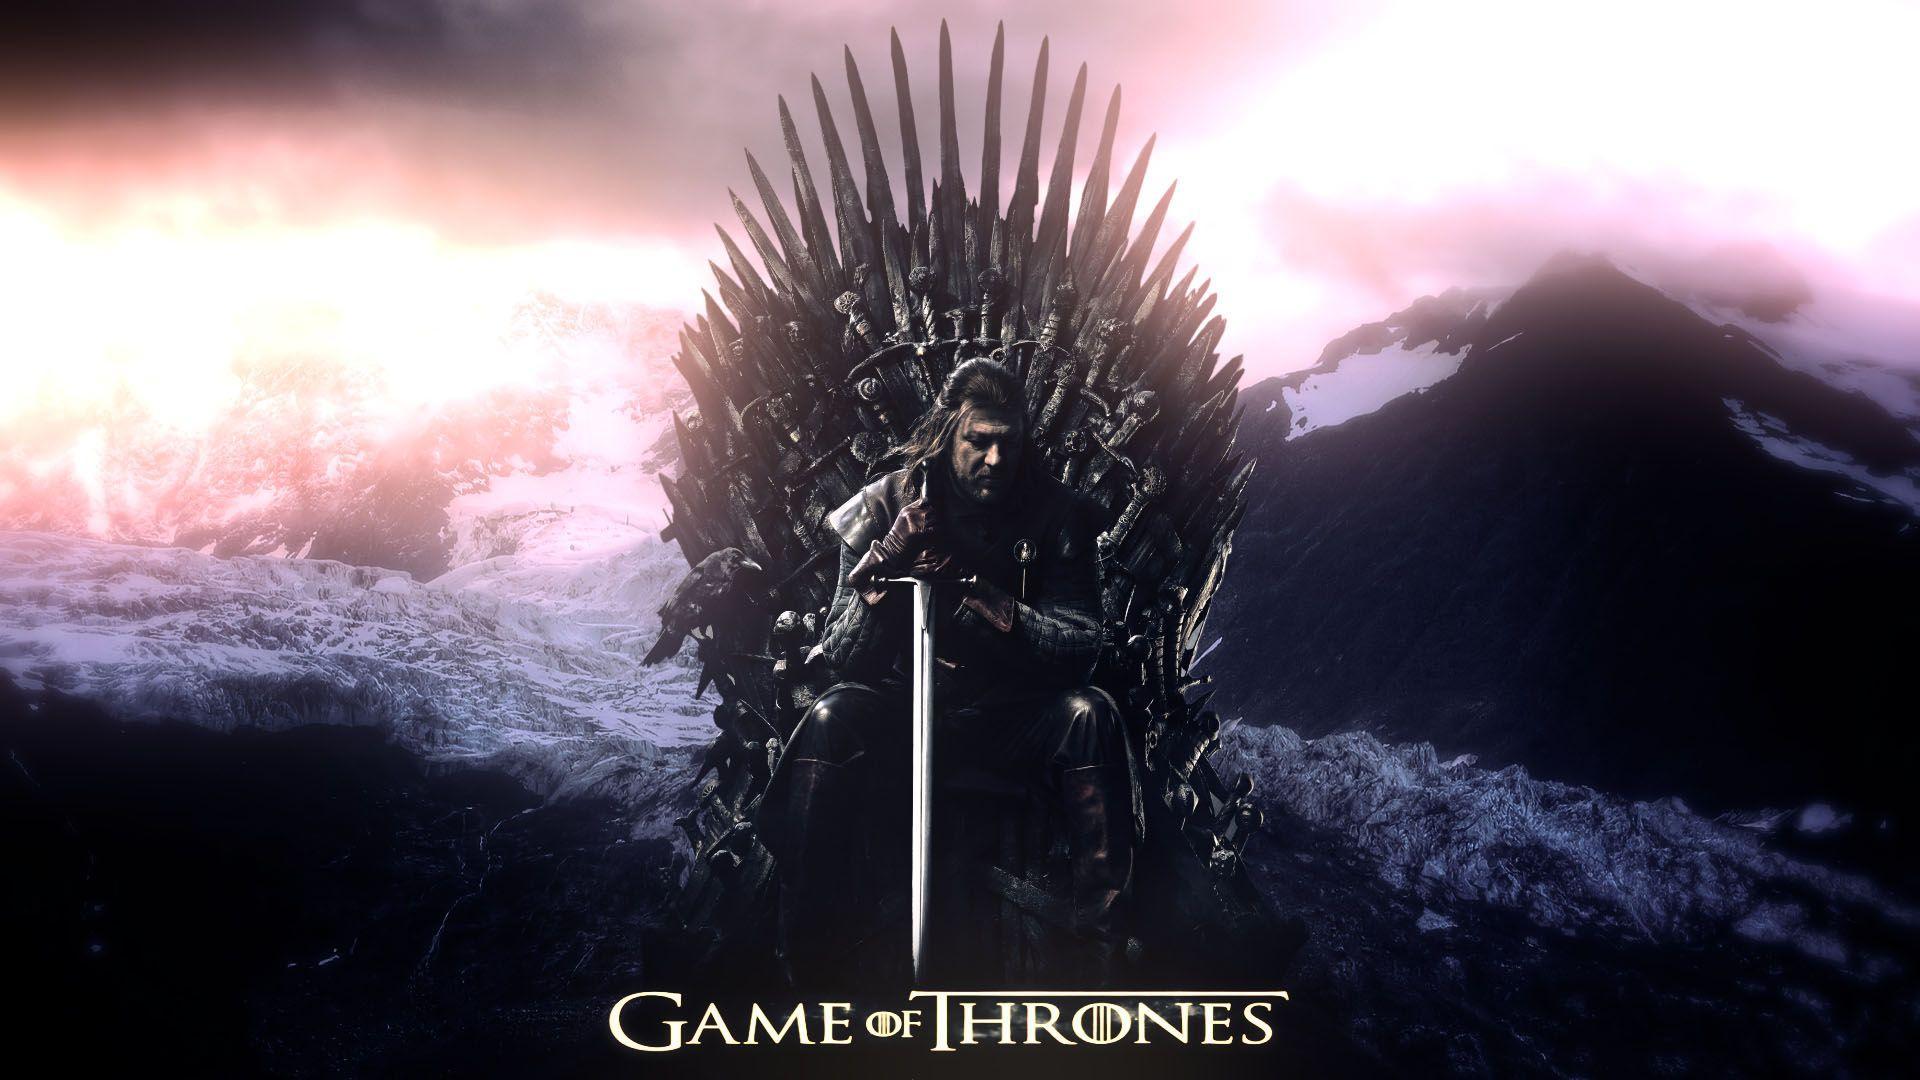 Game of Thrones Stark on the Iron Throne